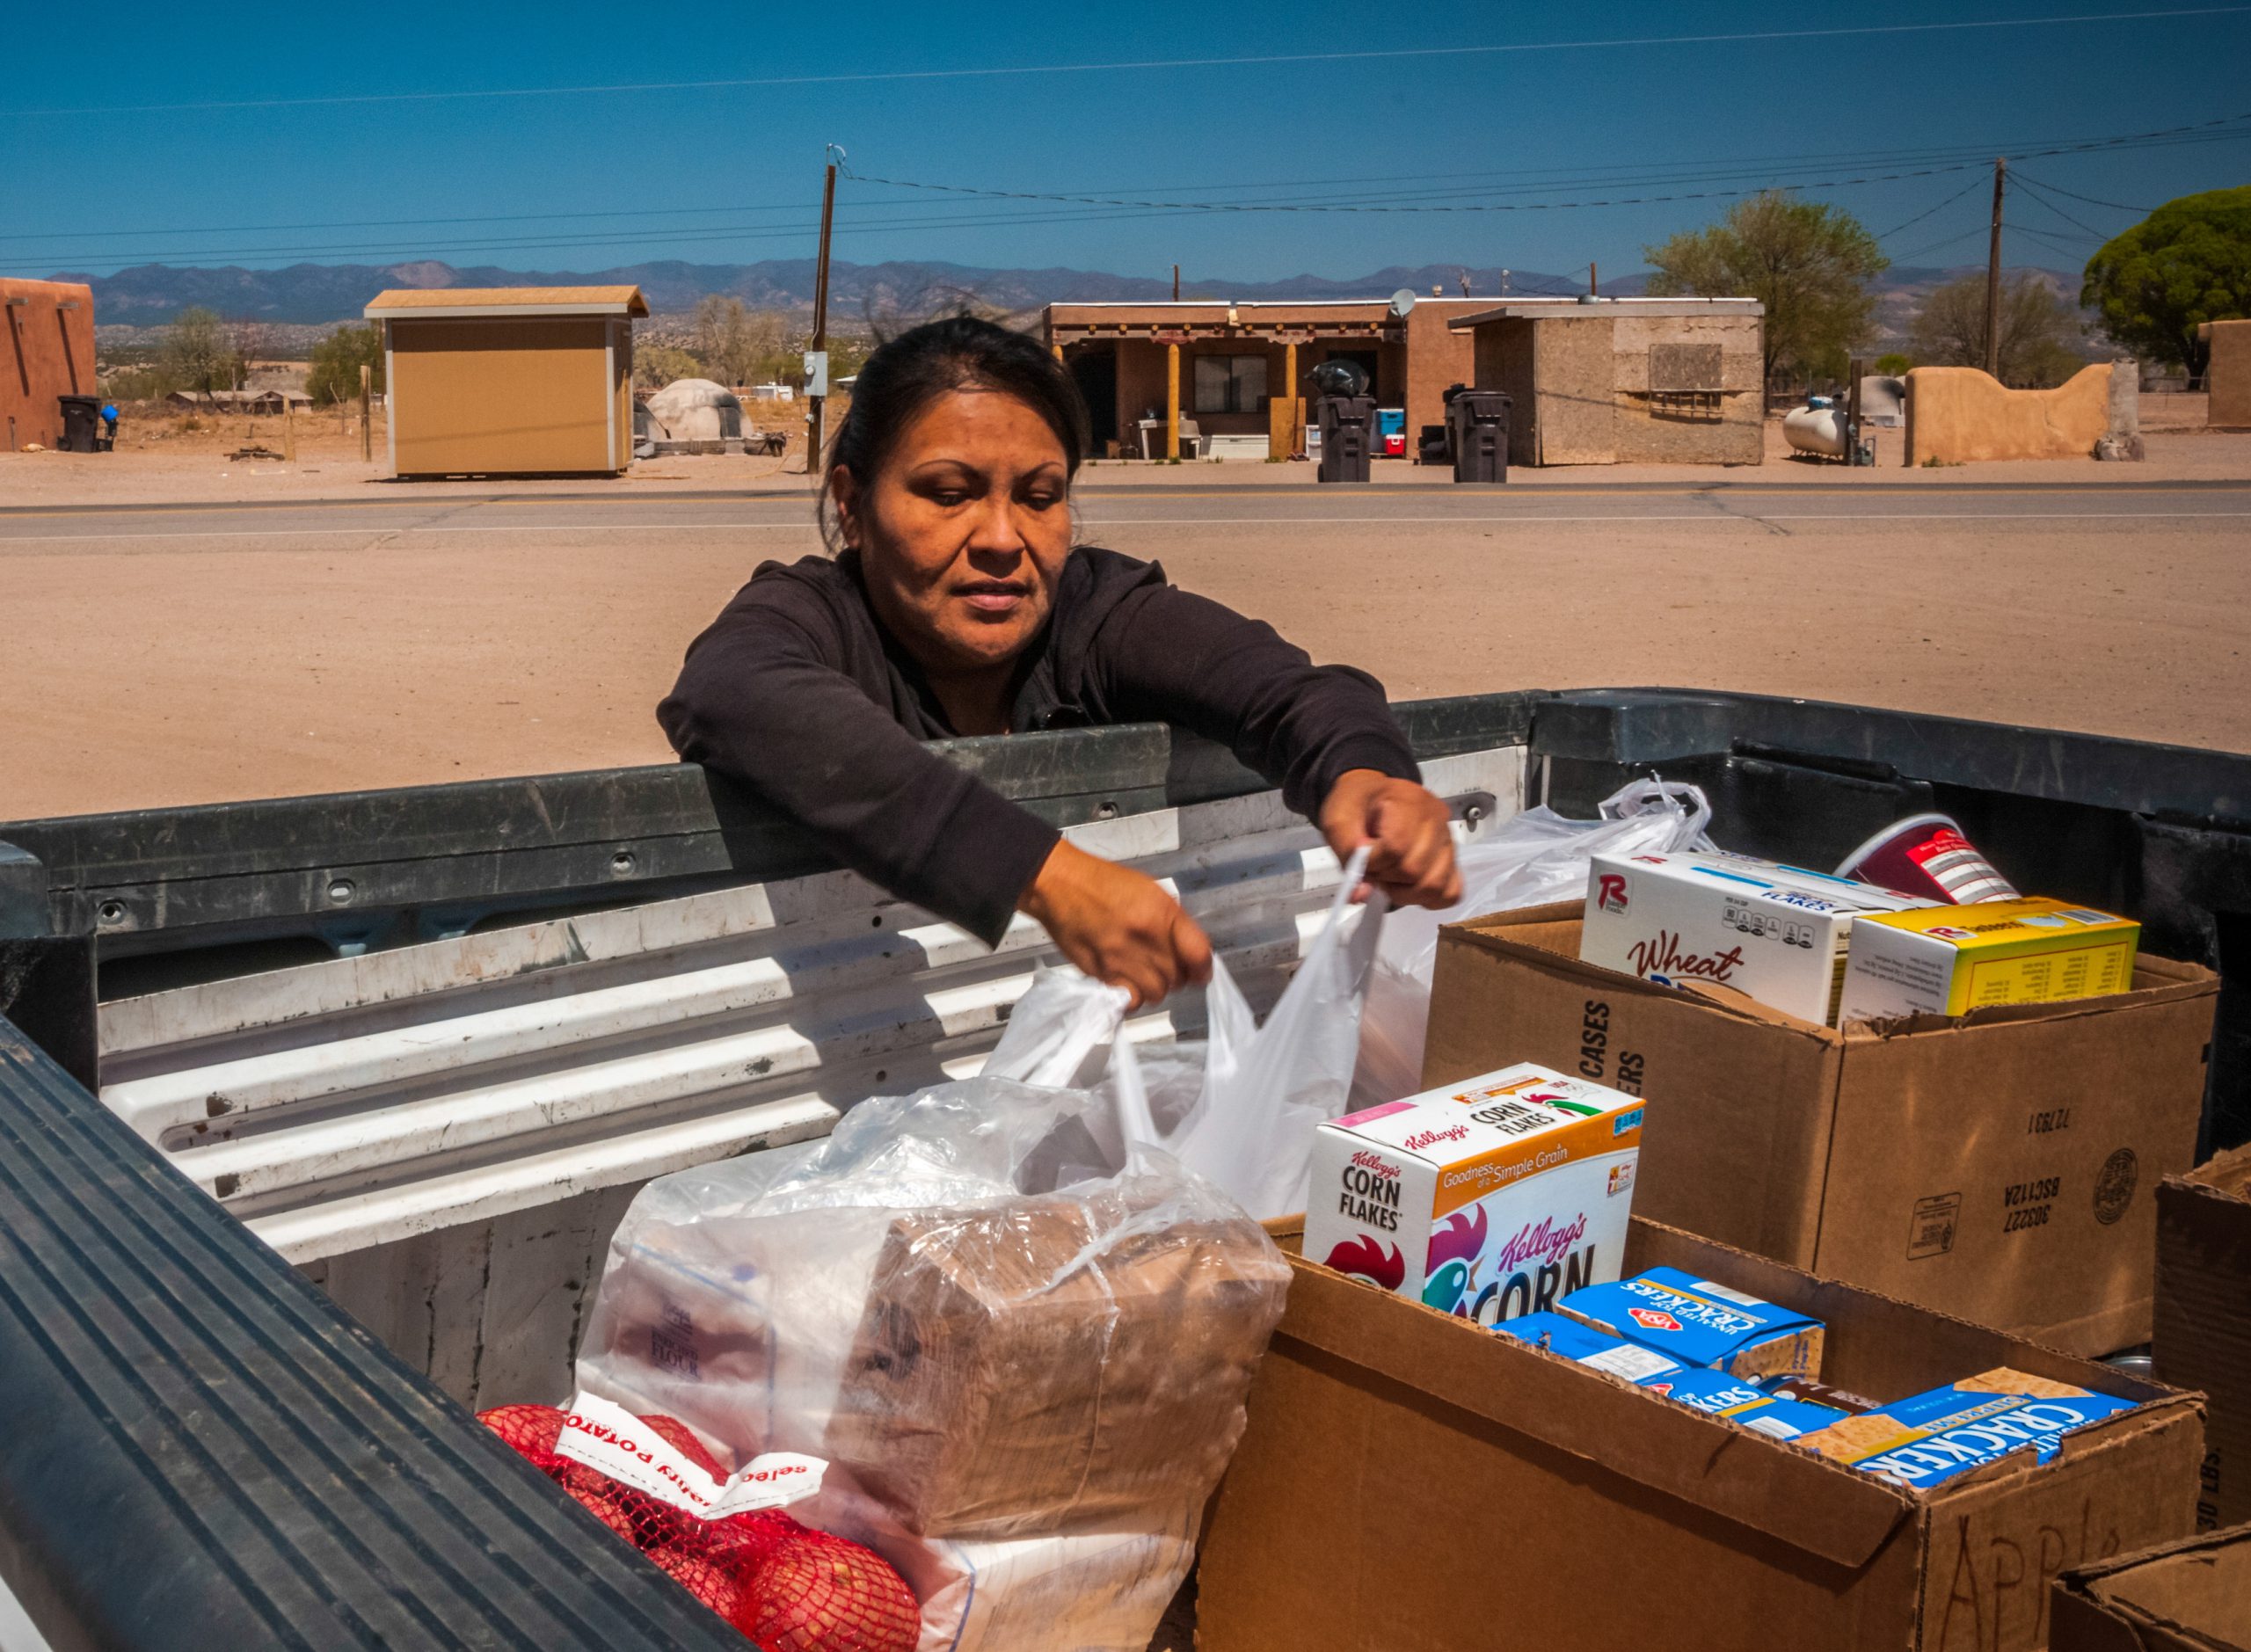 Food Distribution Program on Indian Reservations